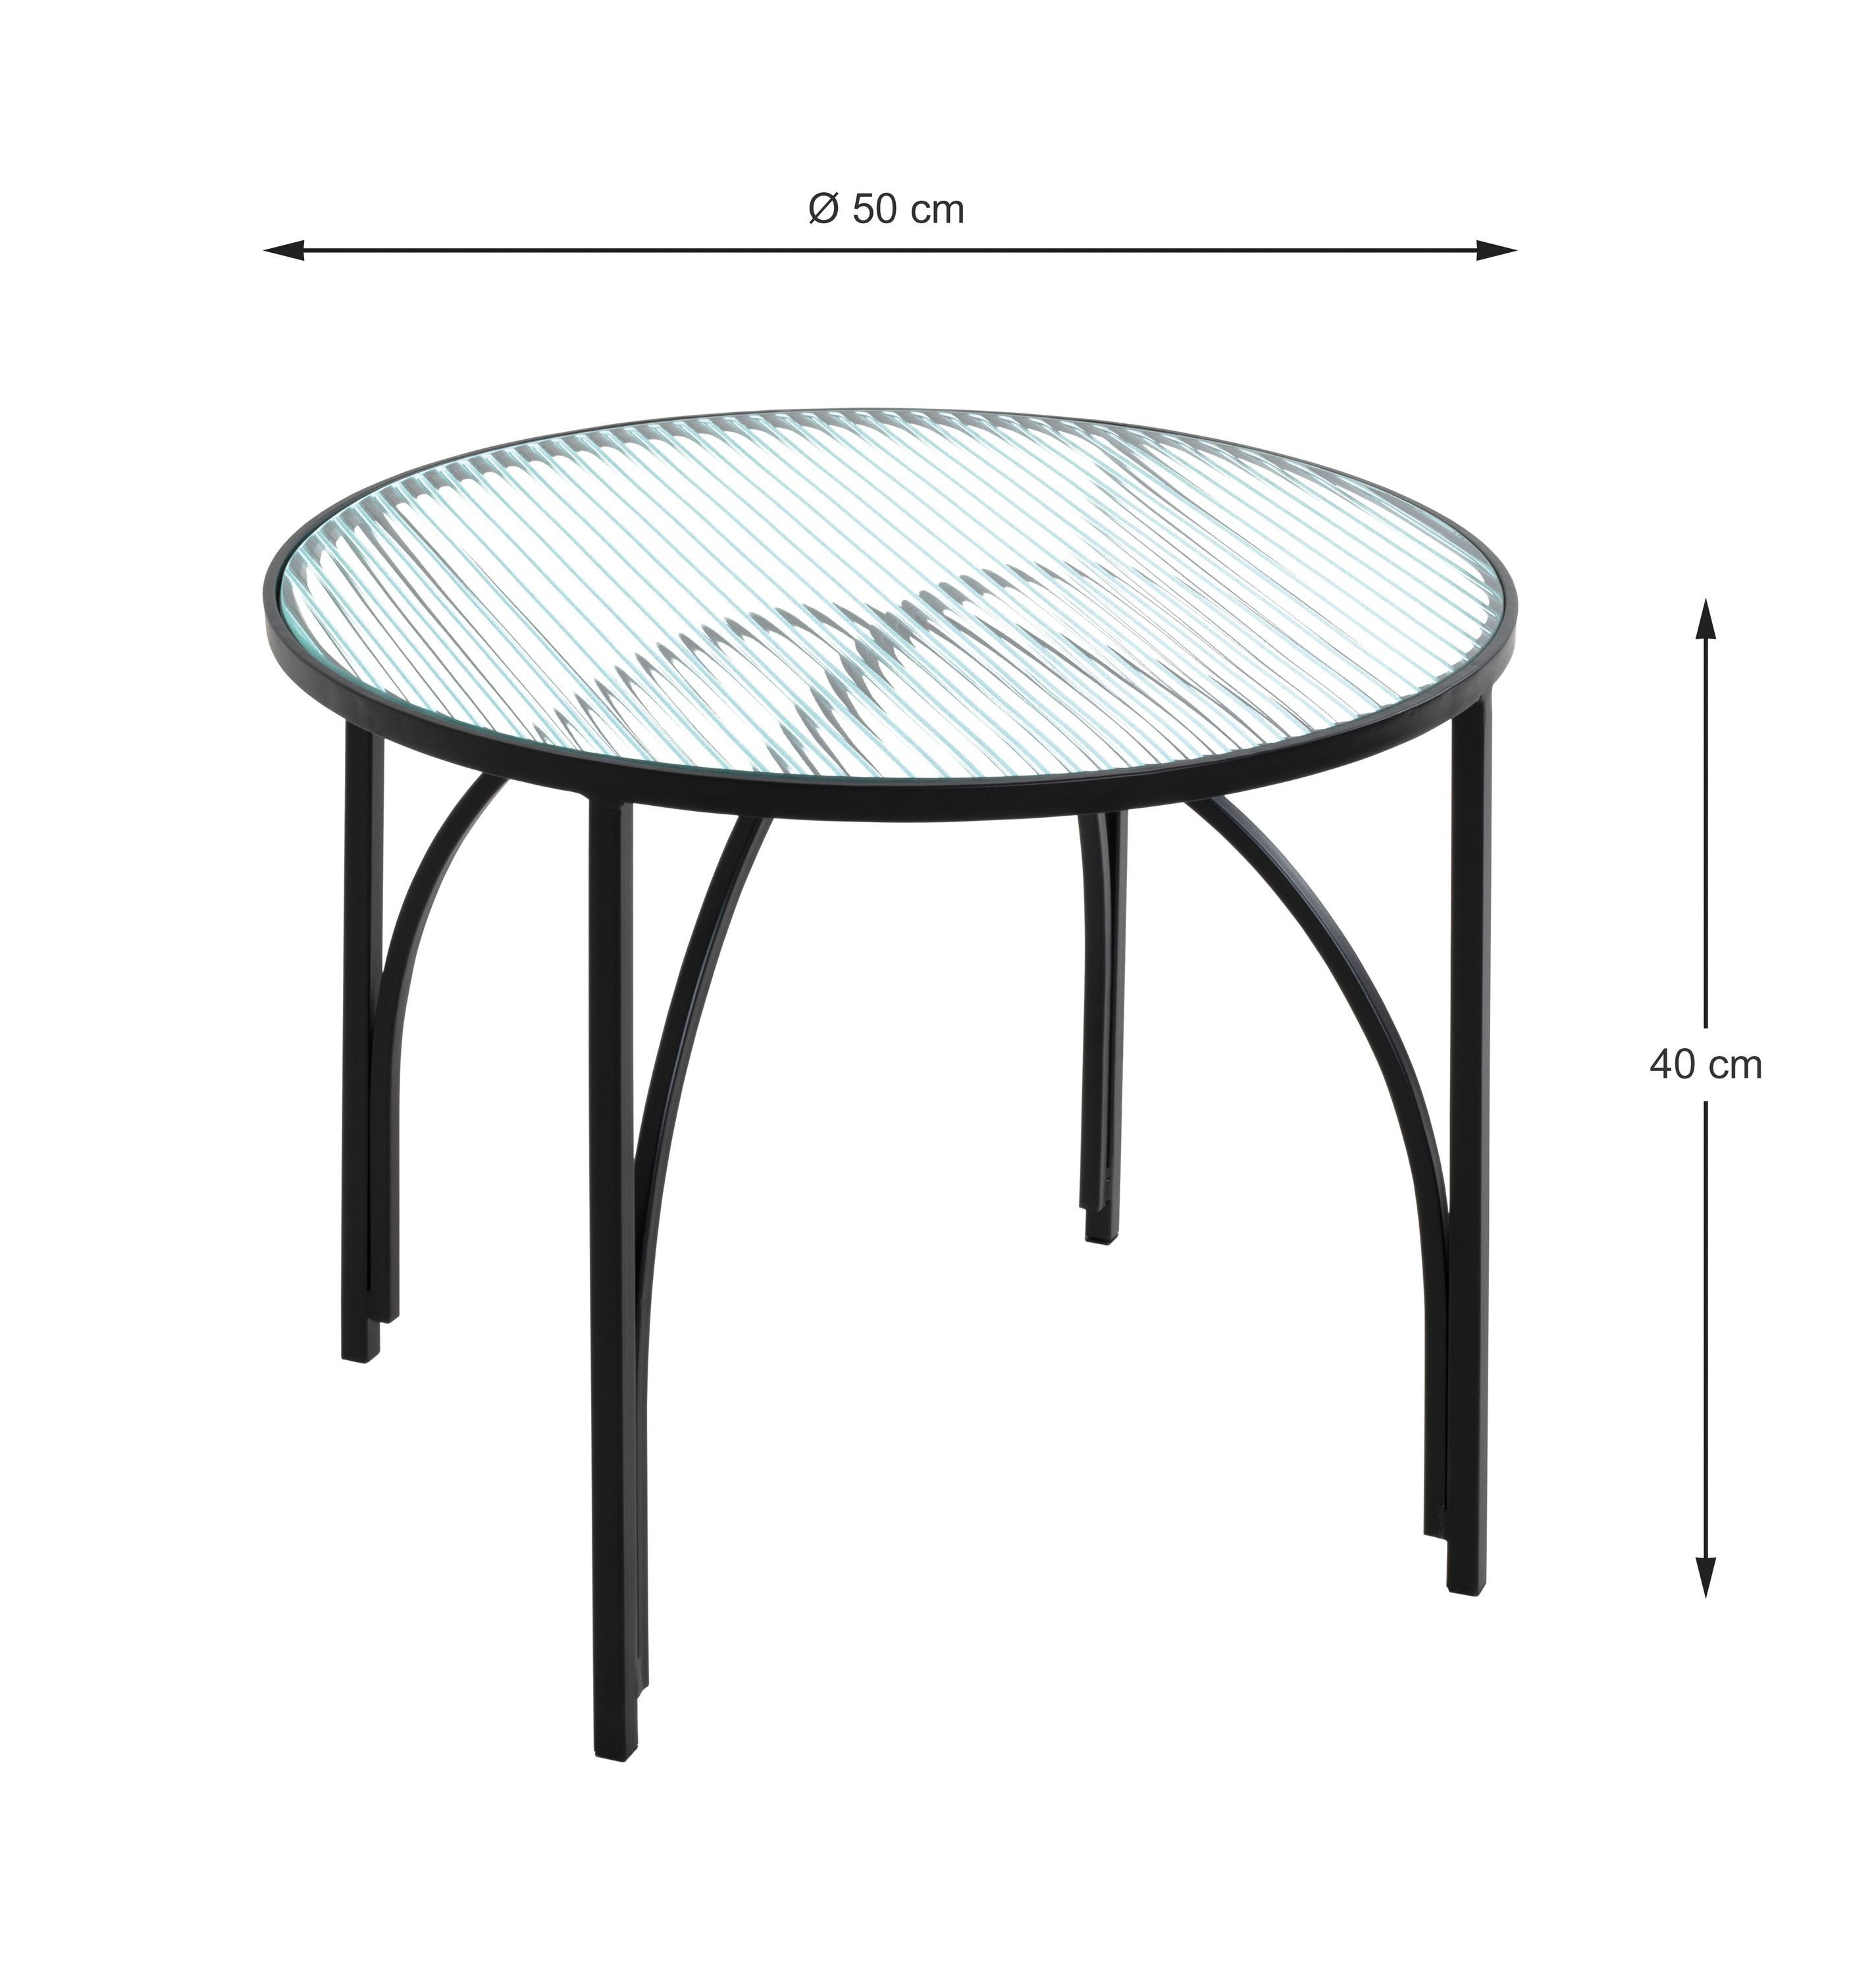 DH Beistelltisch HAKU HAKU Möbel Beistelltisch, cm schwarz Beistelltisch (DH cm) Kaffeetisch 50x40 50x40